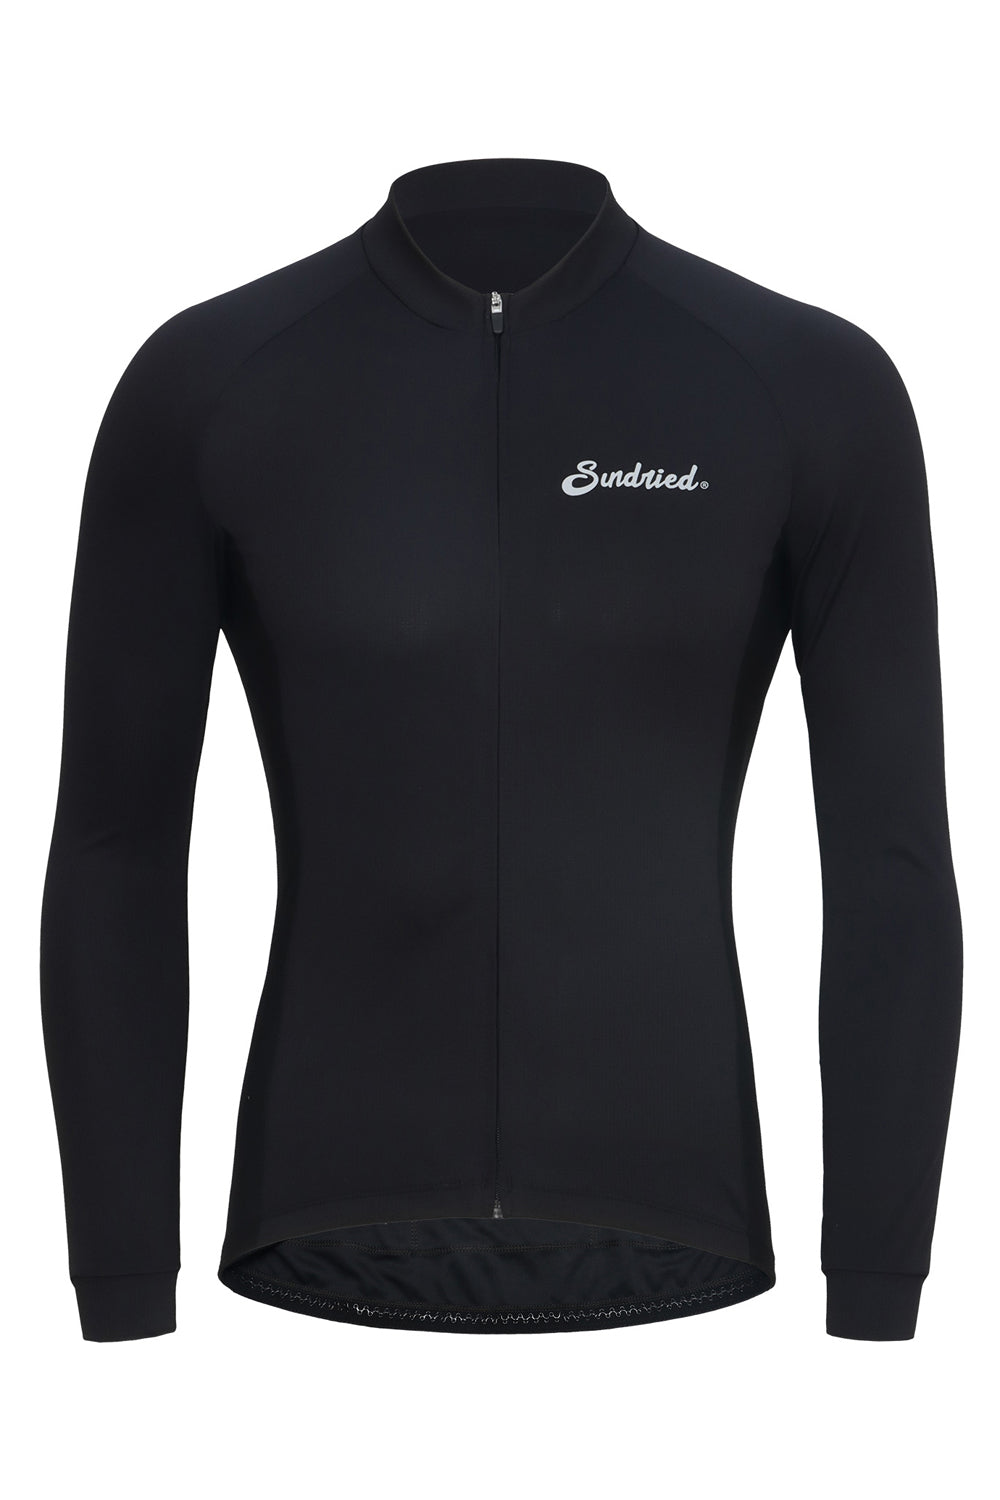 Sundried Sport Men's Black Long Sleeved Cycle Jersey Bib Shorts S SS1007 S Black Activewear